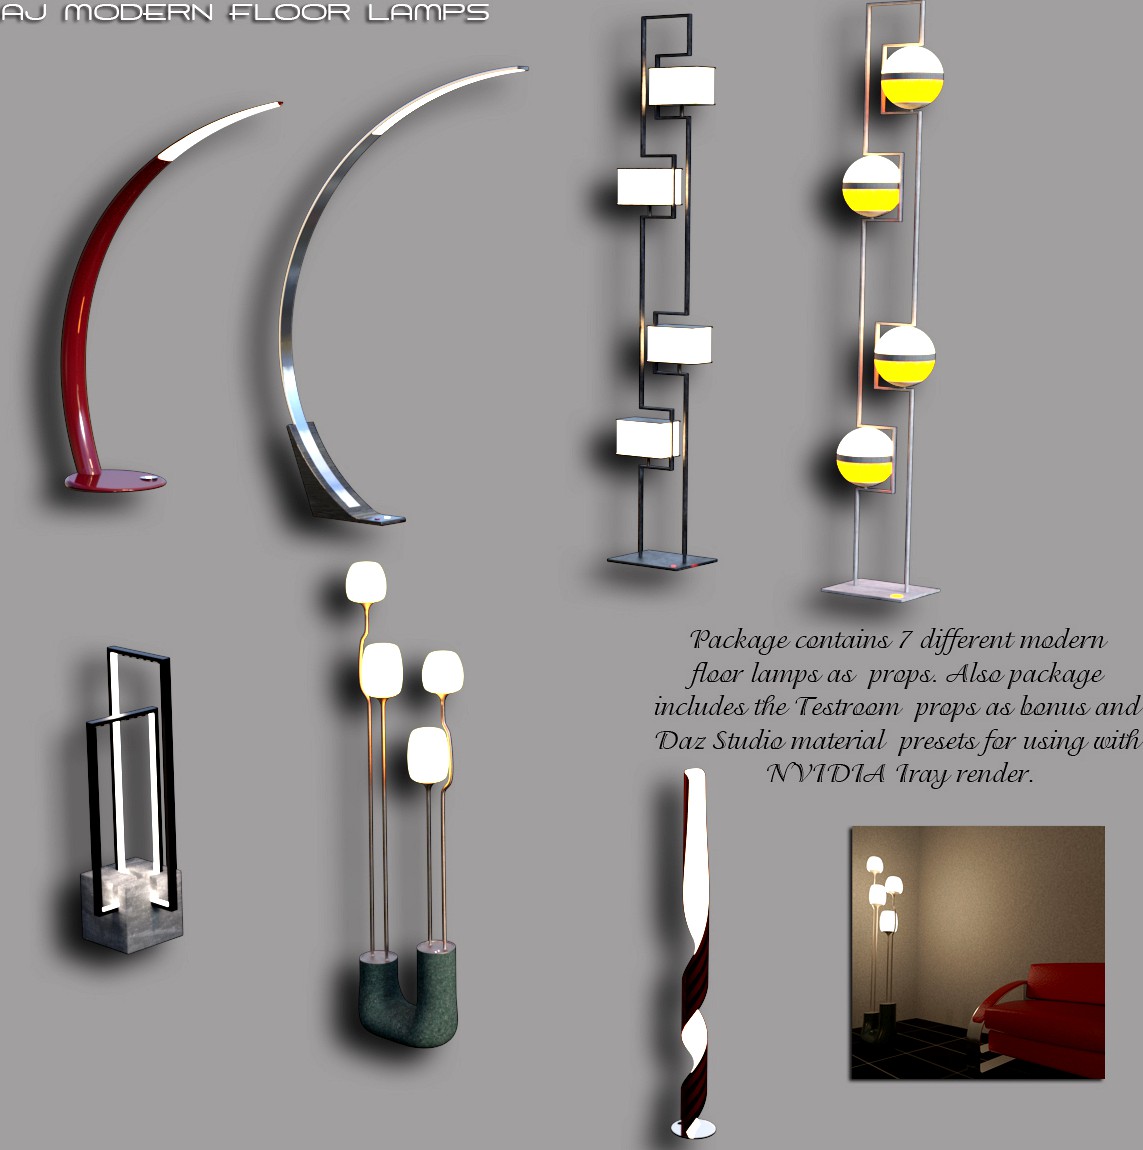 AJ Modern Floor Lamps